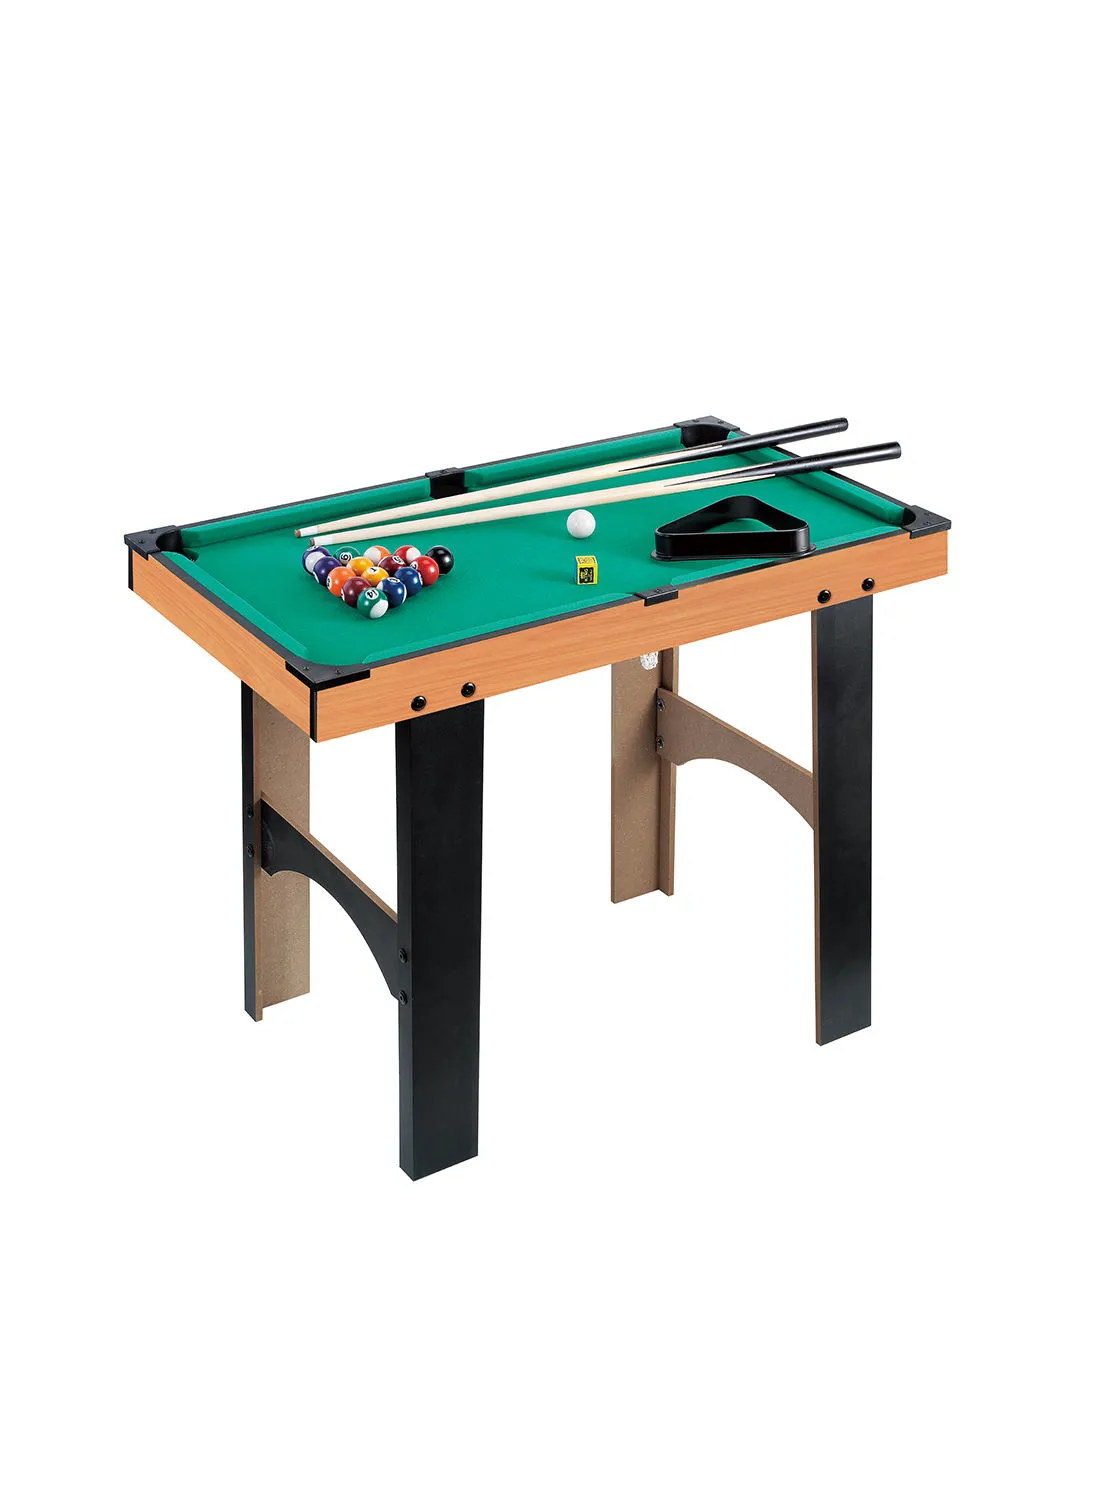 XIANGJUN Billiards Pool Table Game Set 79 x 43.5 x 67cm